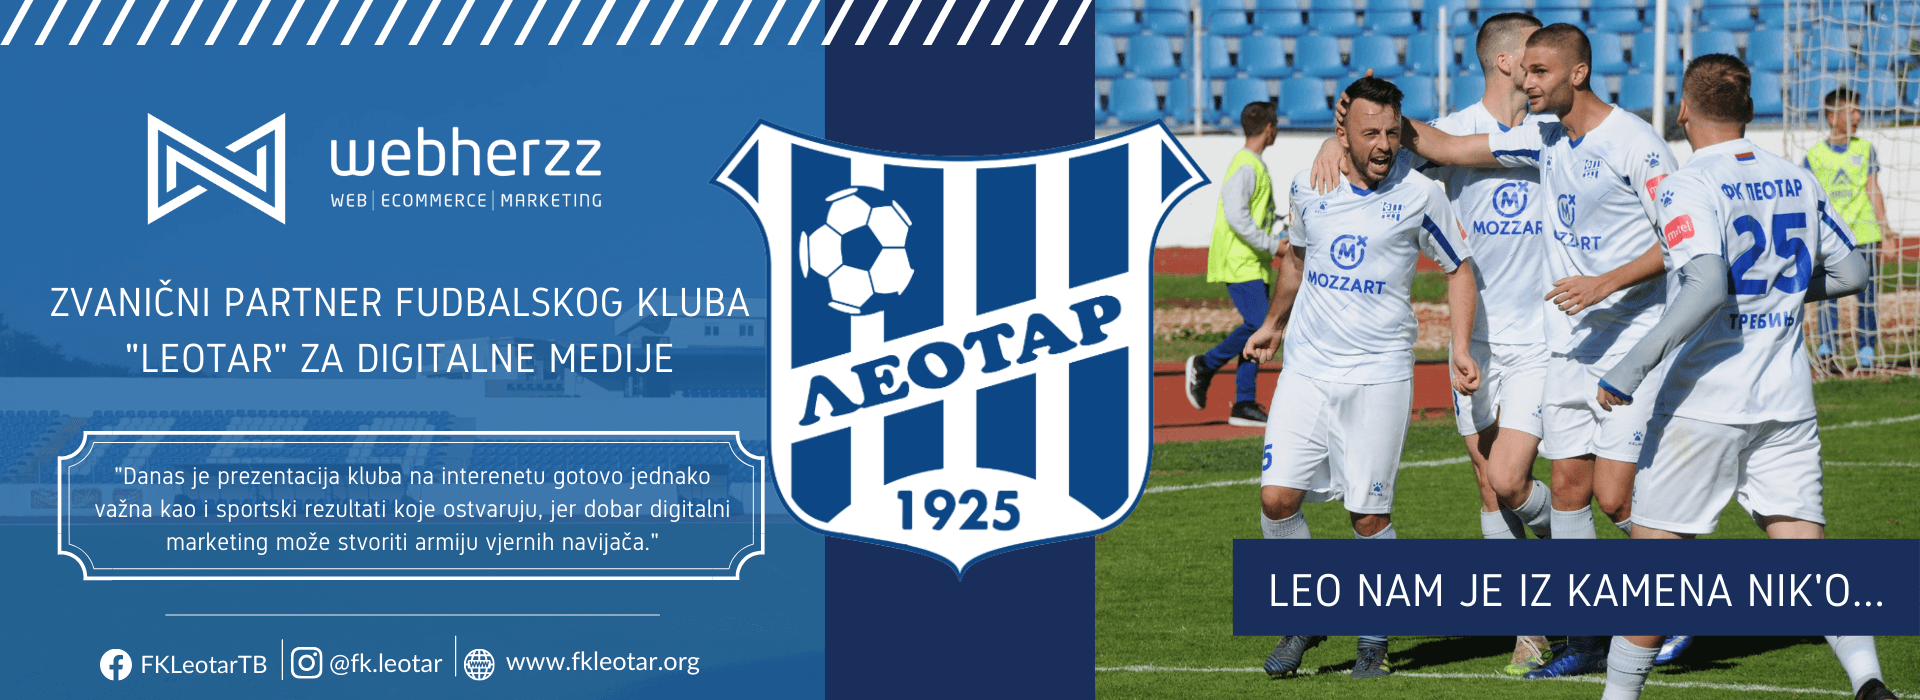 Zvanični partner fudbalskog kluba Leotar za digitalne medije (1)